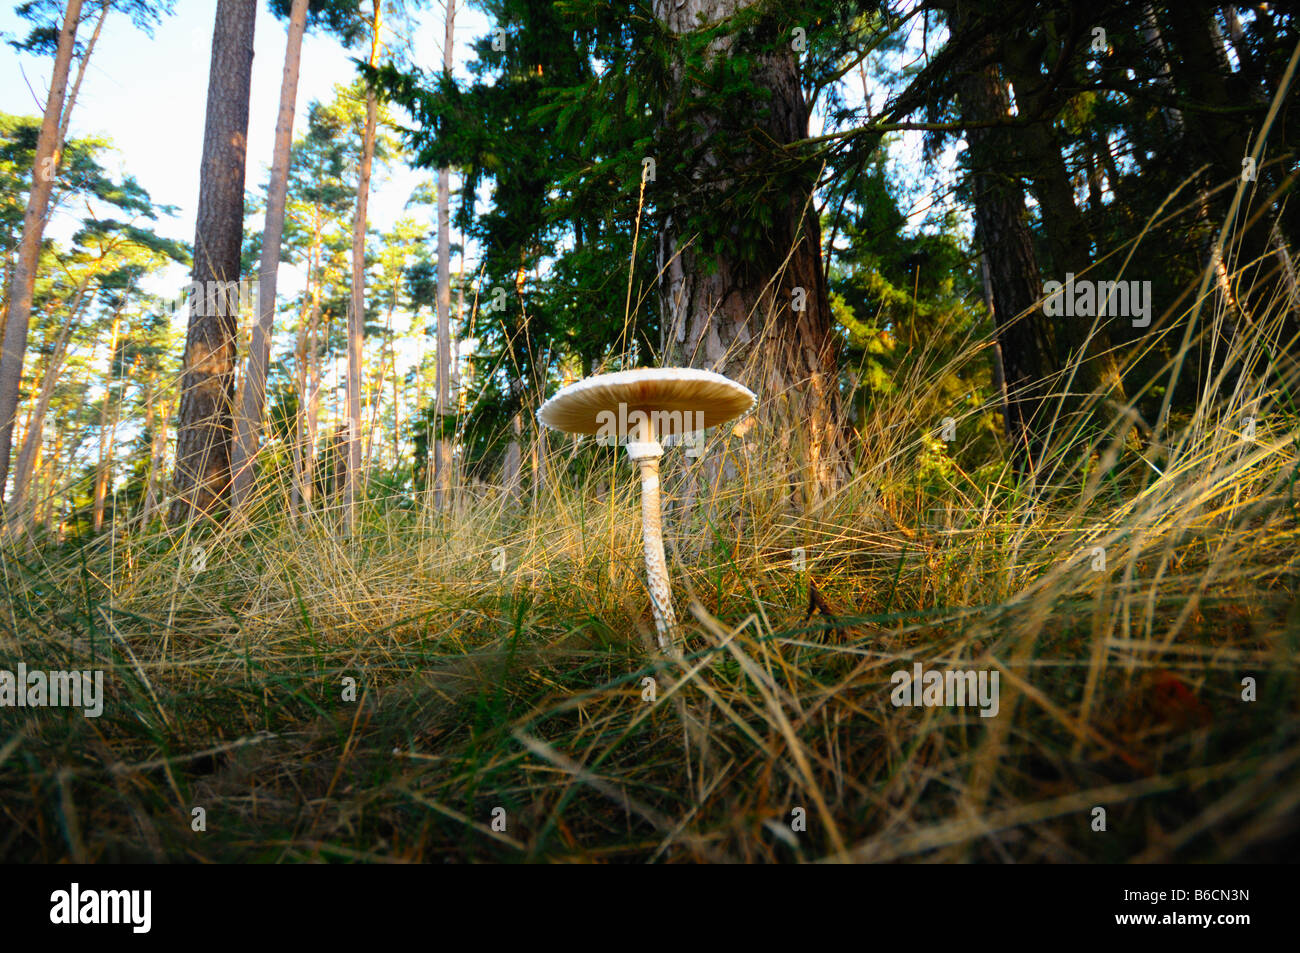 Parasol mushroom (Macrolepiota procera) growing in field, Bavaria, Germany Stock Photo